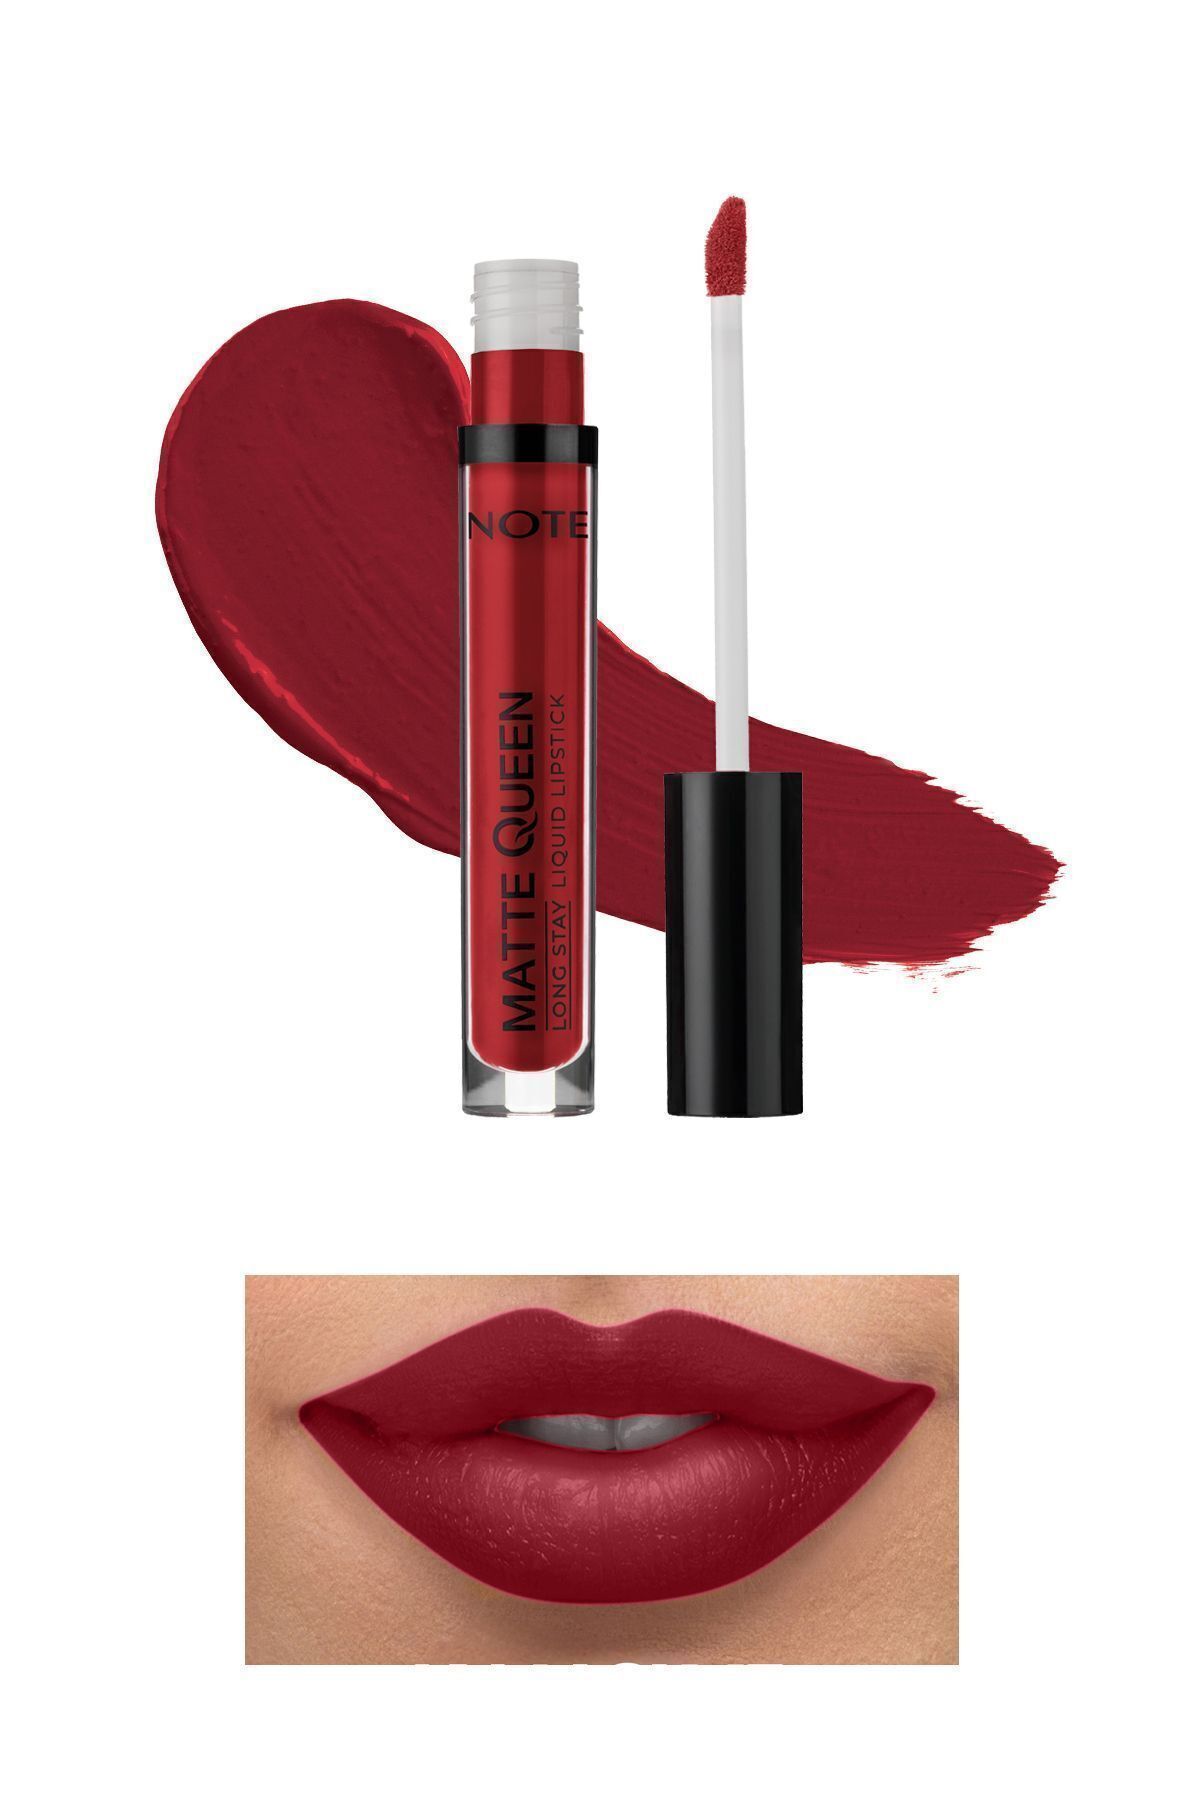 Note Cosmetics Matte Queen Lipstick Kalıcı Likit Ruj 15 Magestic Red - Kırmızı